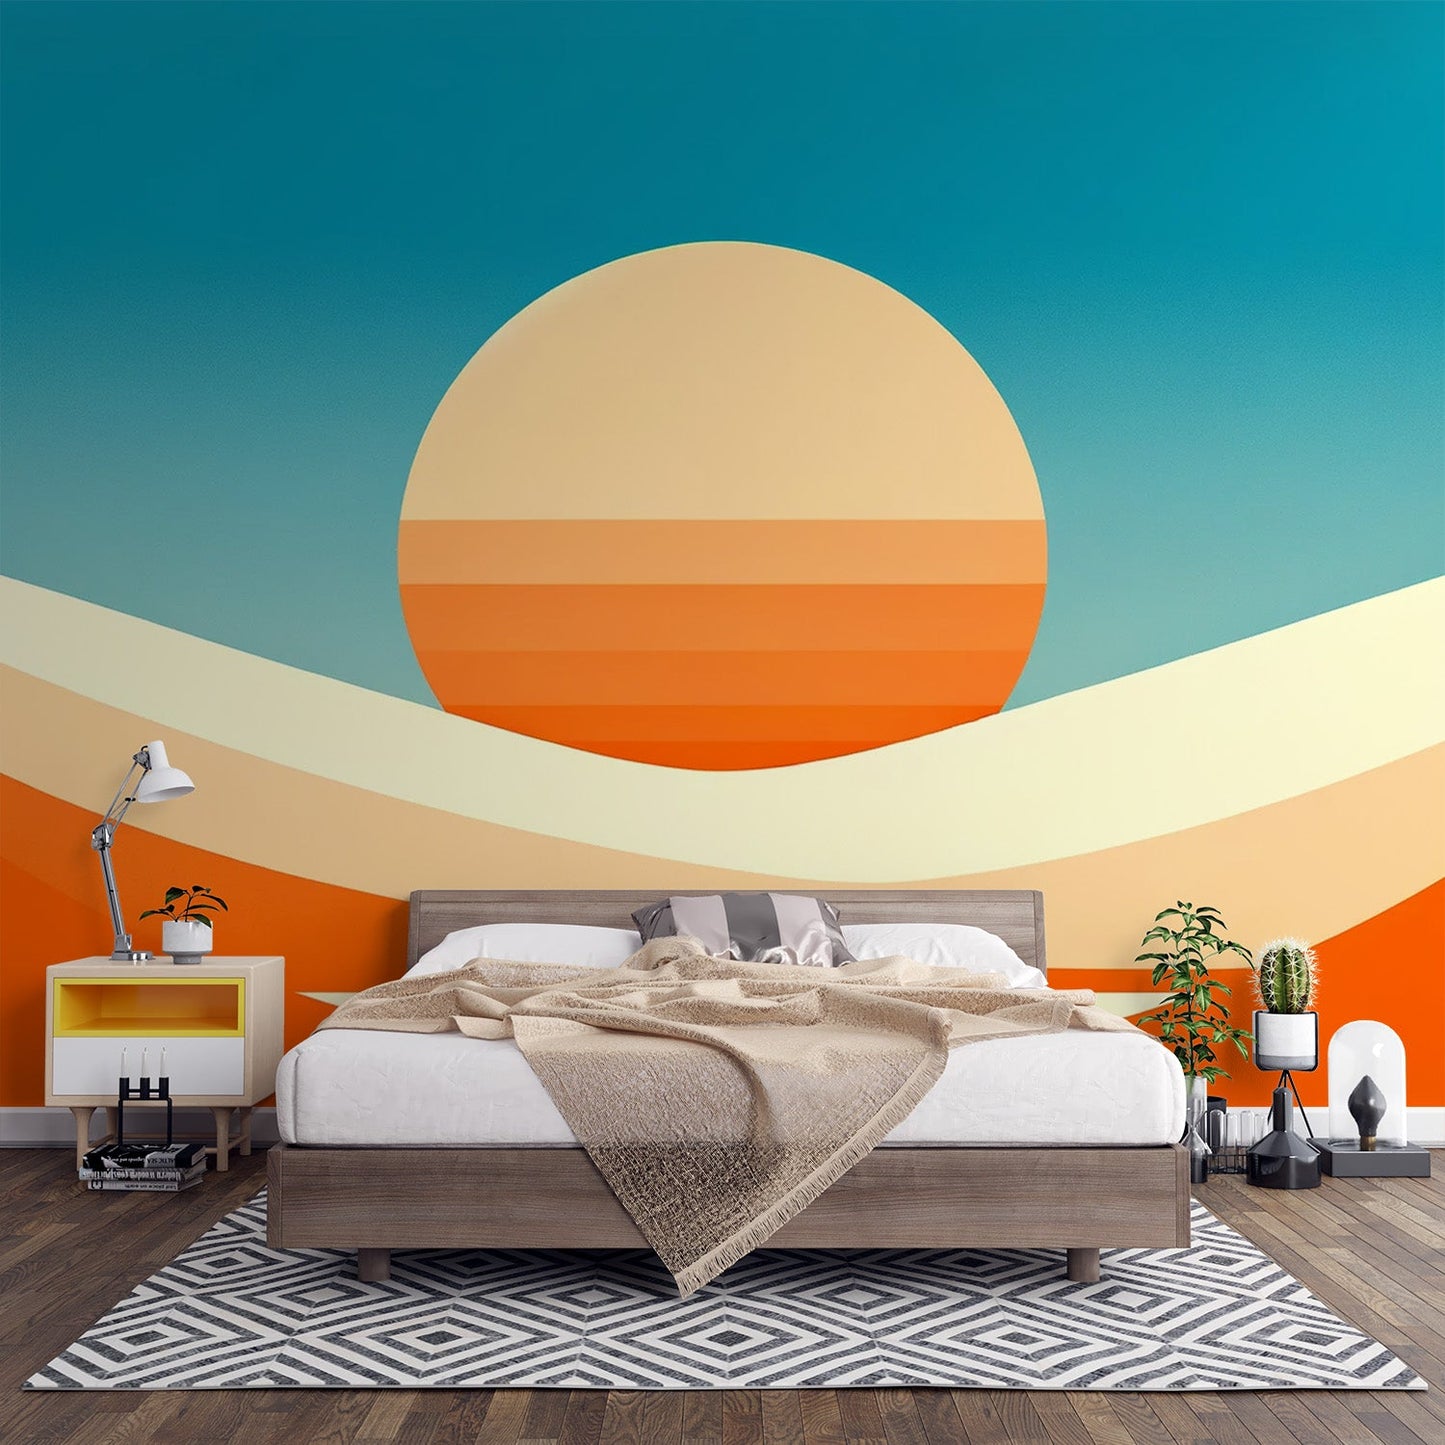 Sand dune wallpaper | Sunset and red dune